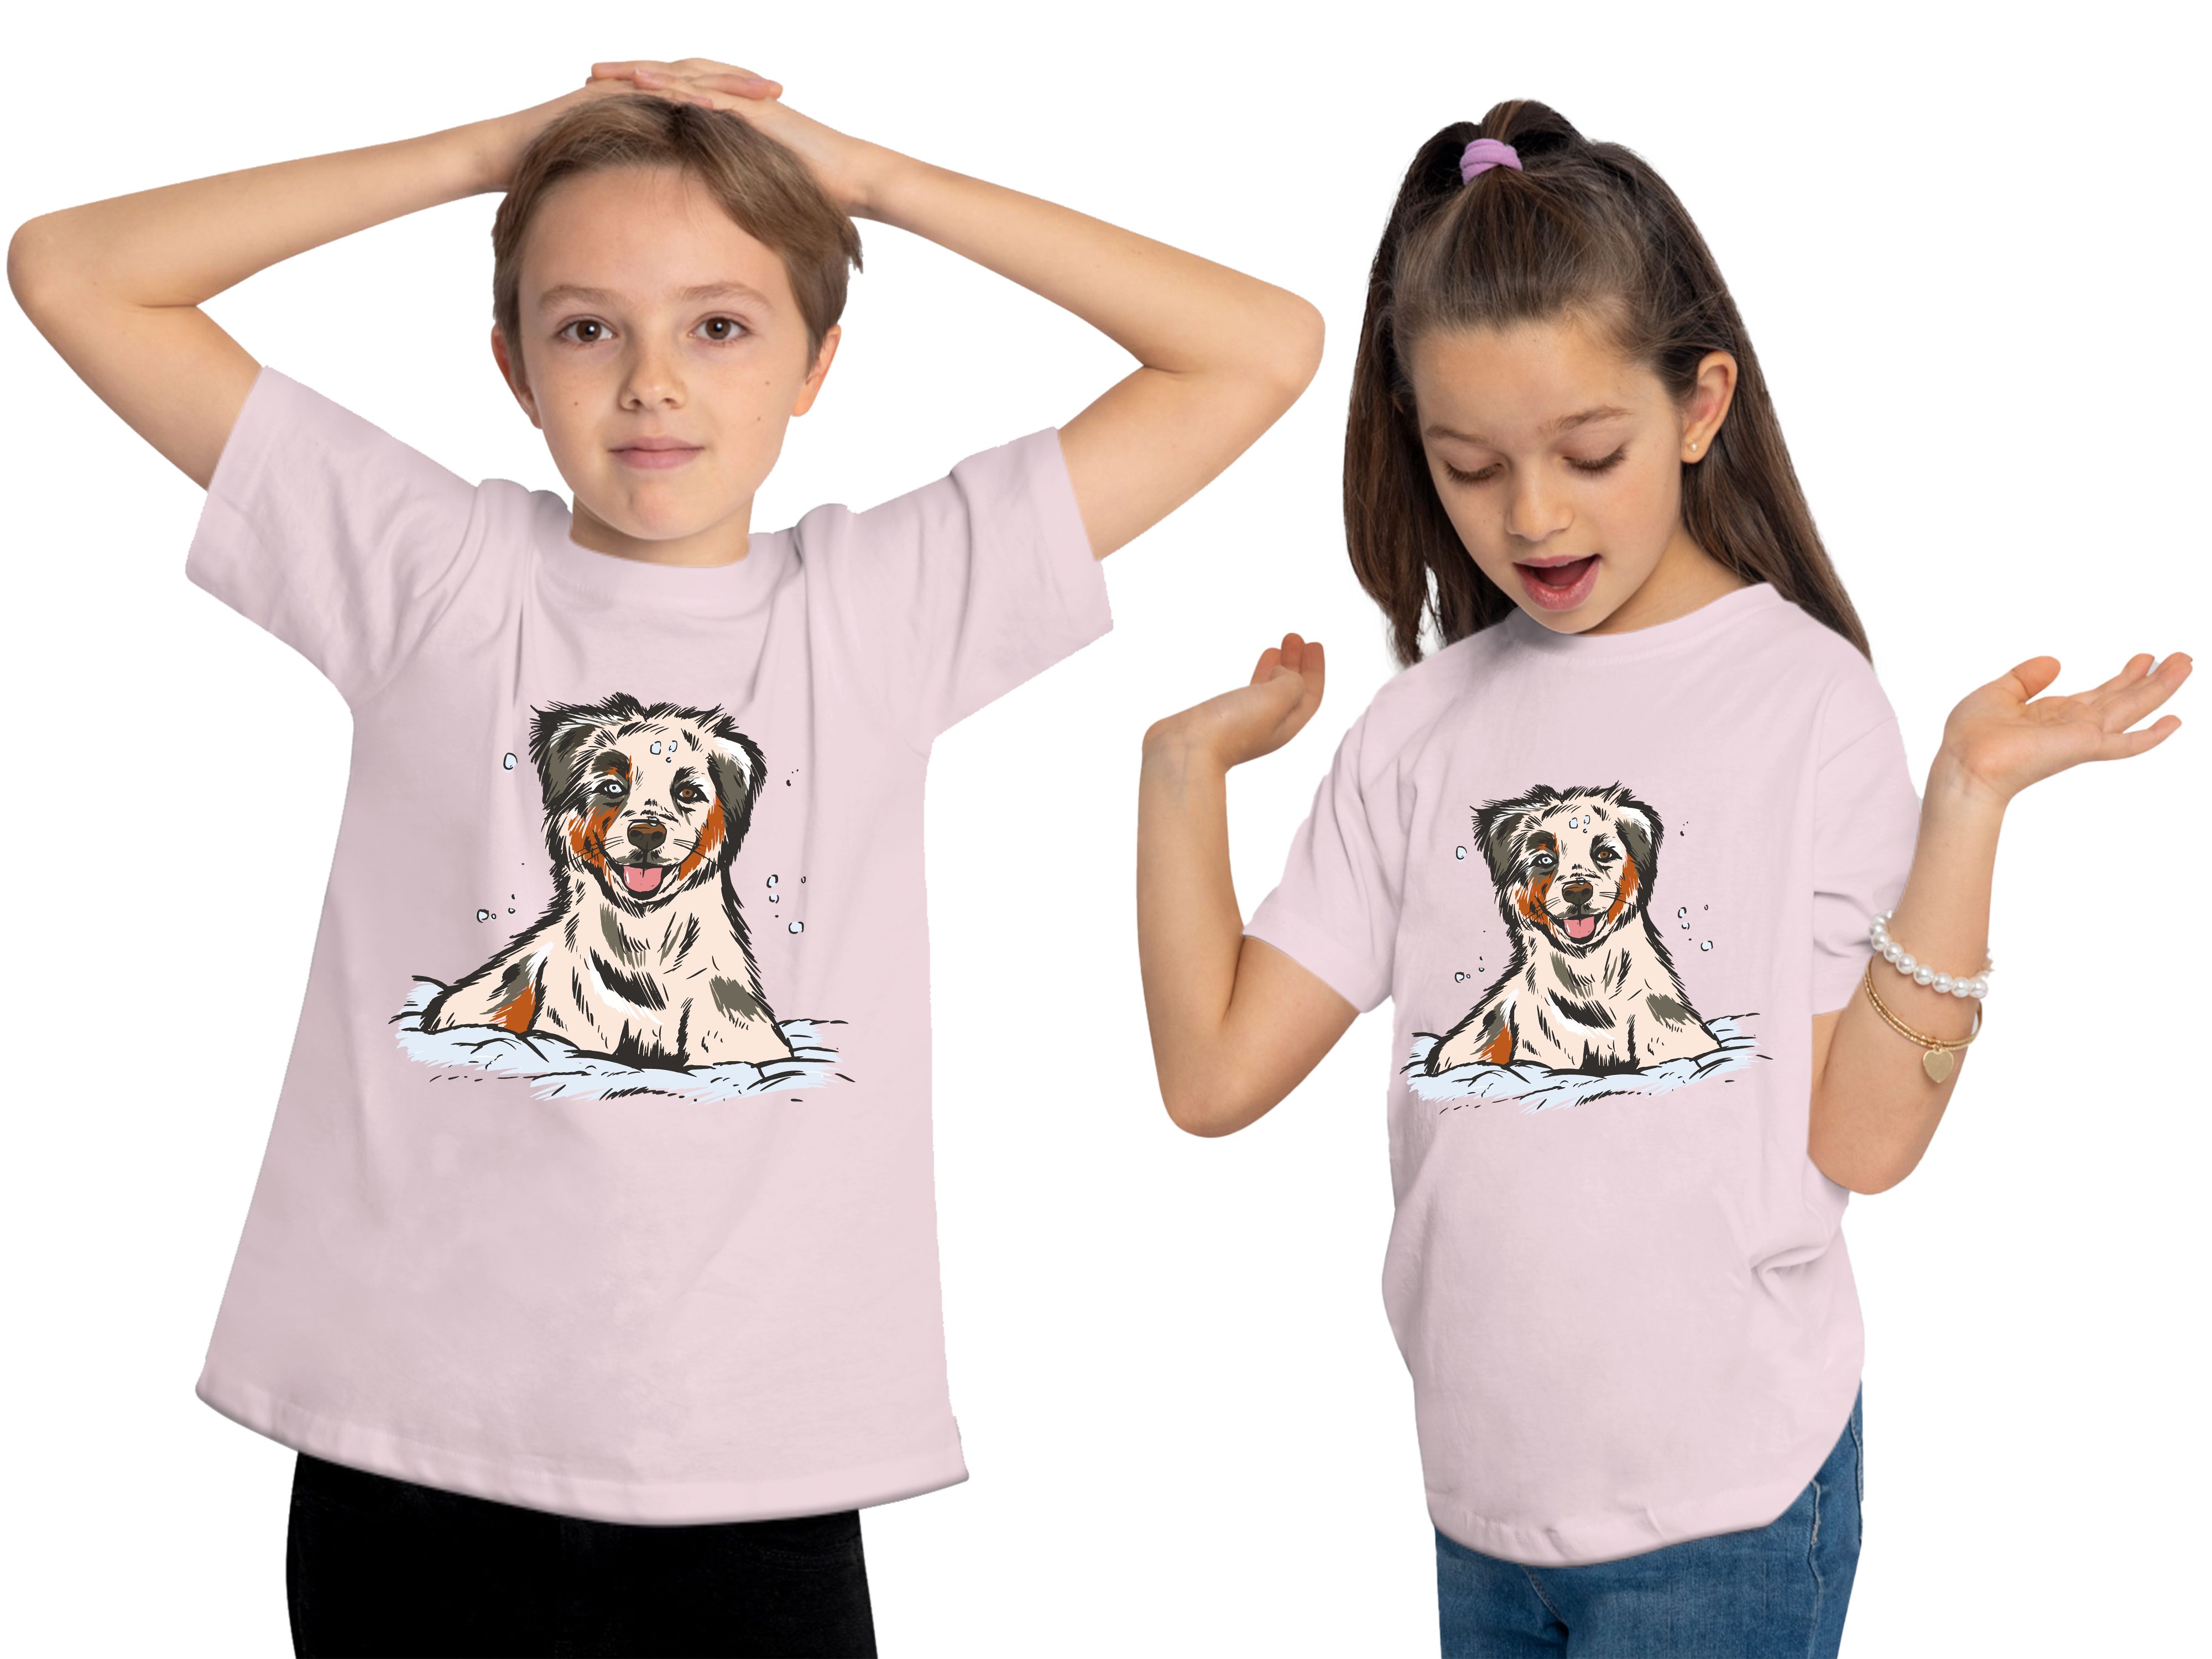 Jugend Hunde T-Shirt bedrucktes Print-Shirt Kinder und Aufdruck, Welpe rosa mit i216 Australian Baumwollshirt Shepherd MyDesign24